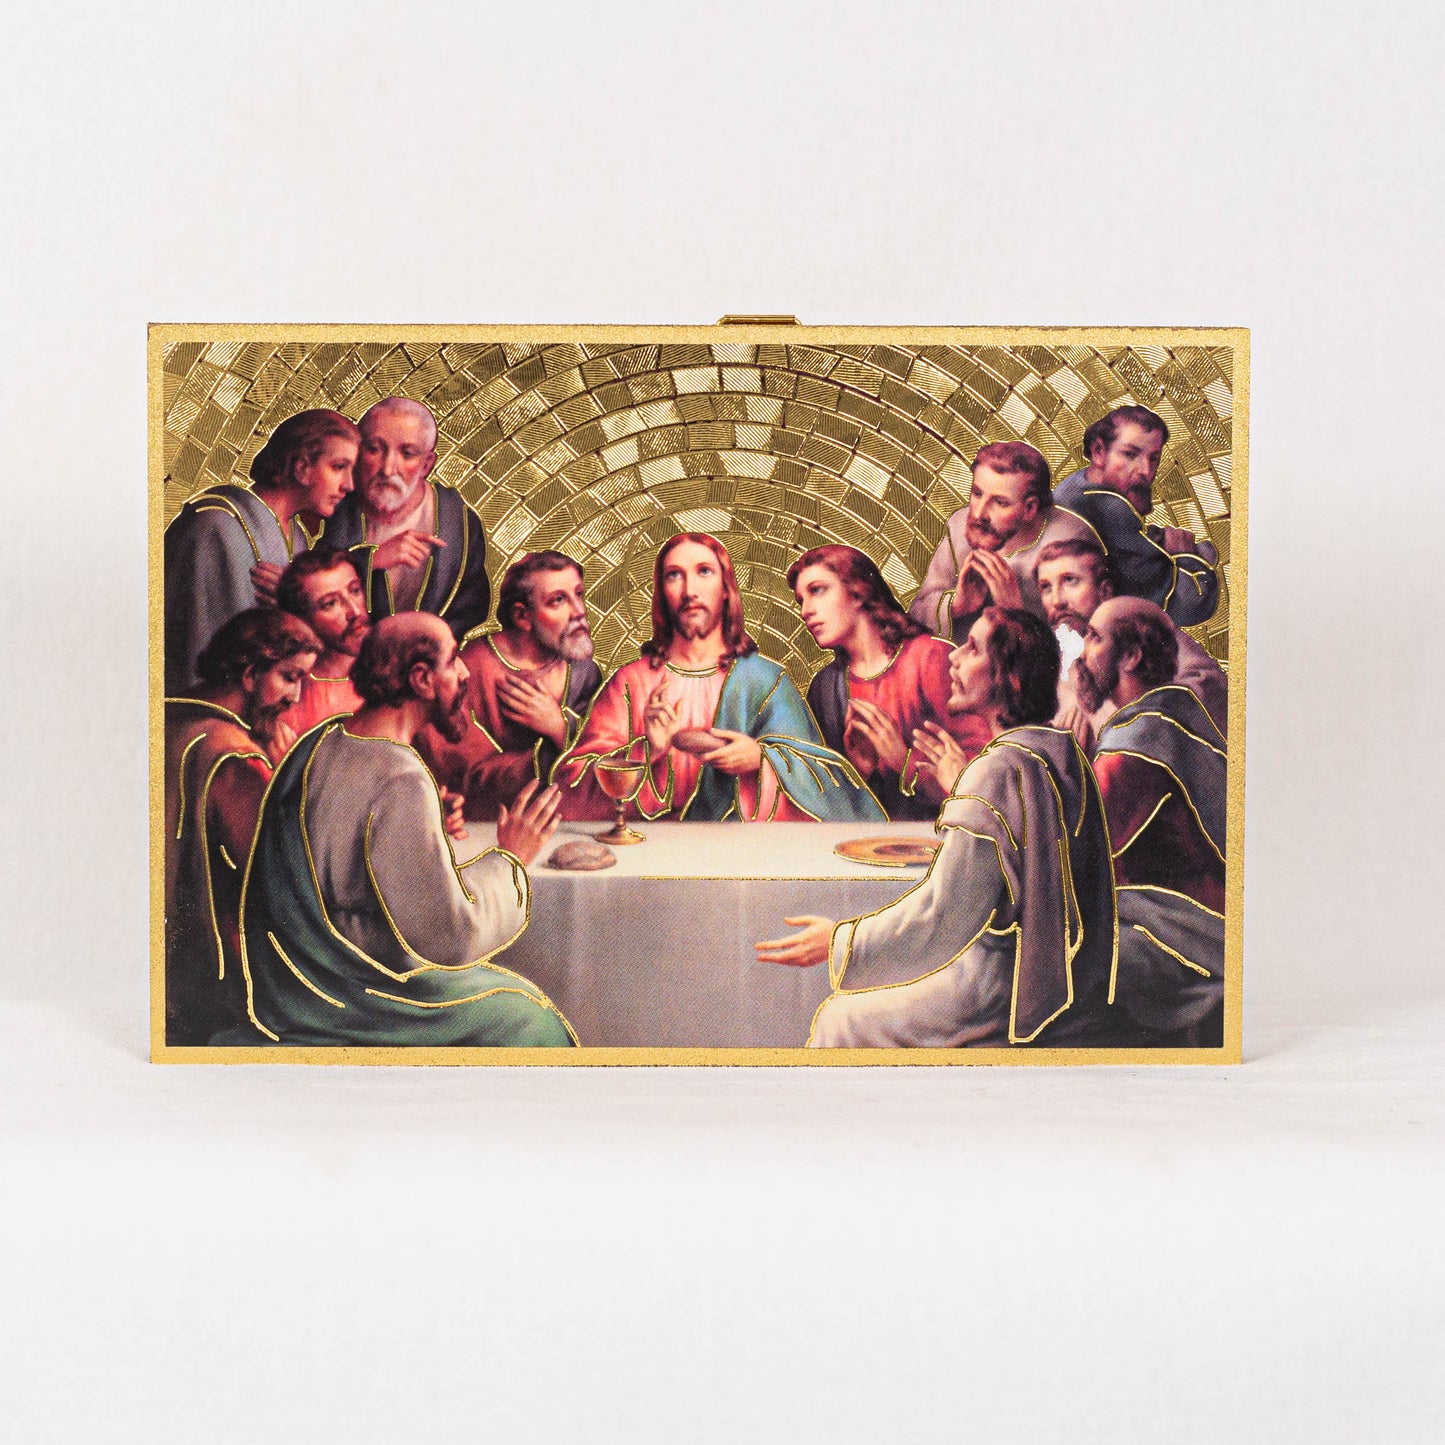 6" x 4" Meal Prayers Gold Foil Mosaic Plaque